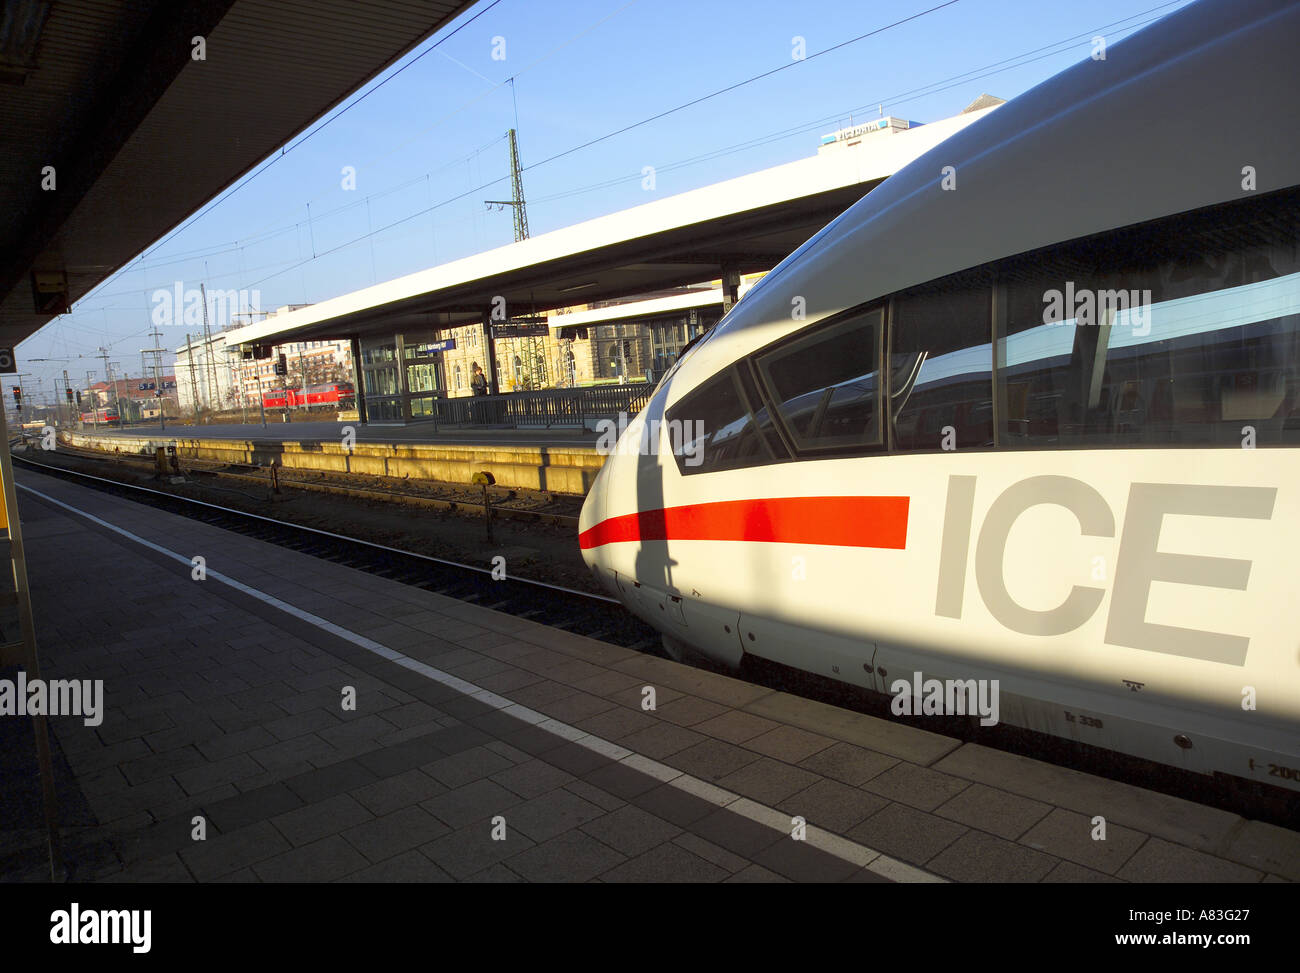 ICE Bahnhof, Hauptbahnhof, Nürnberg (Nürnberg), Bayern, Deutschland Stockfoto